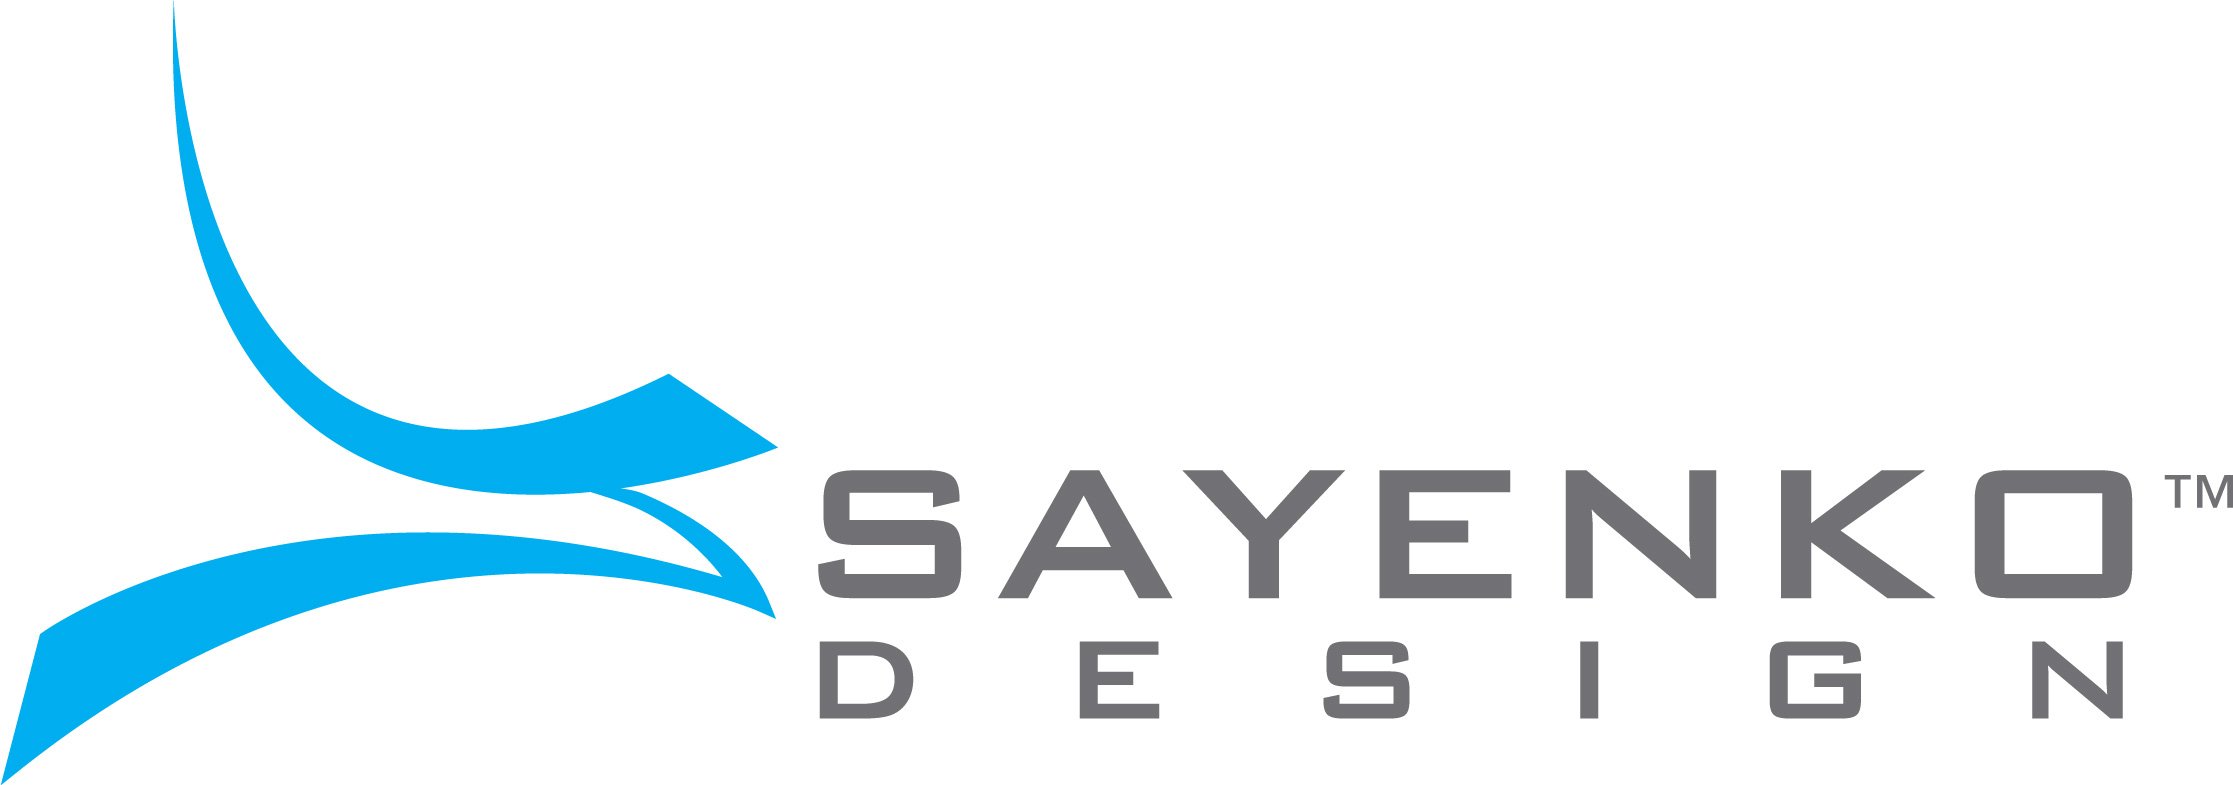 Top Web Development Business Logo: Sayenko Design